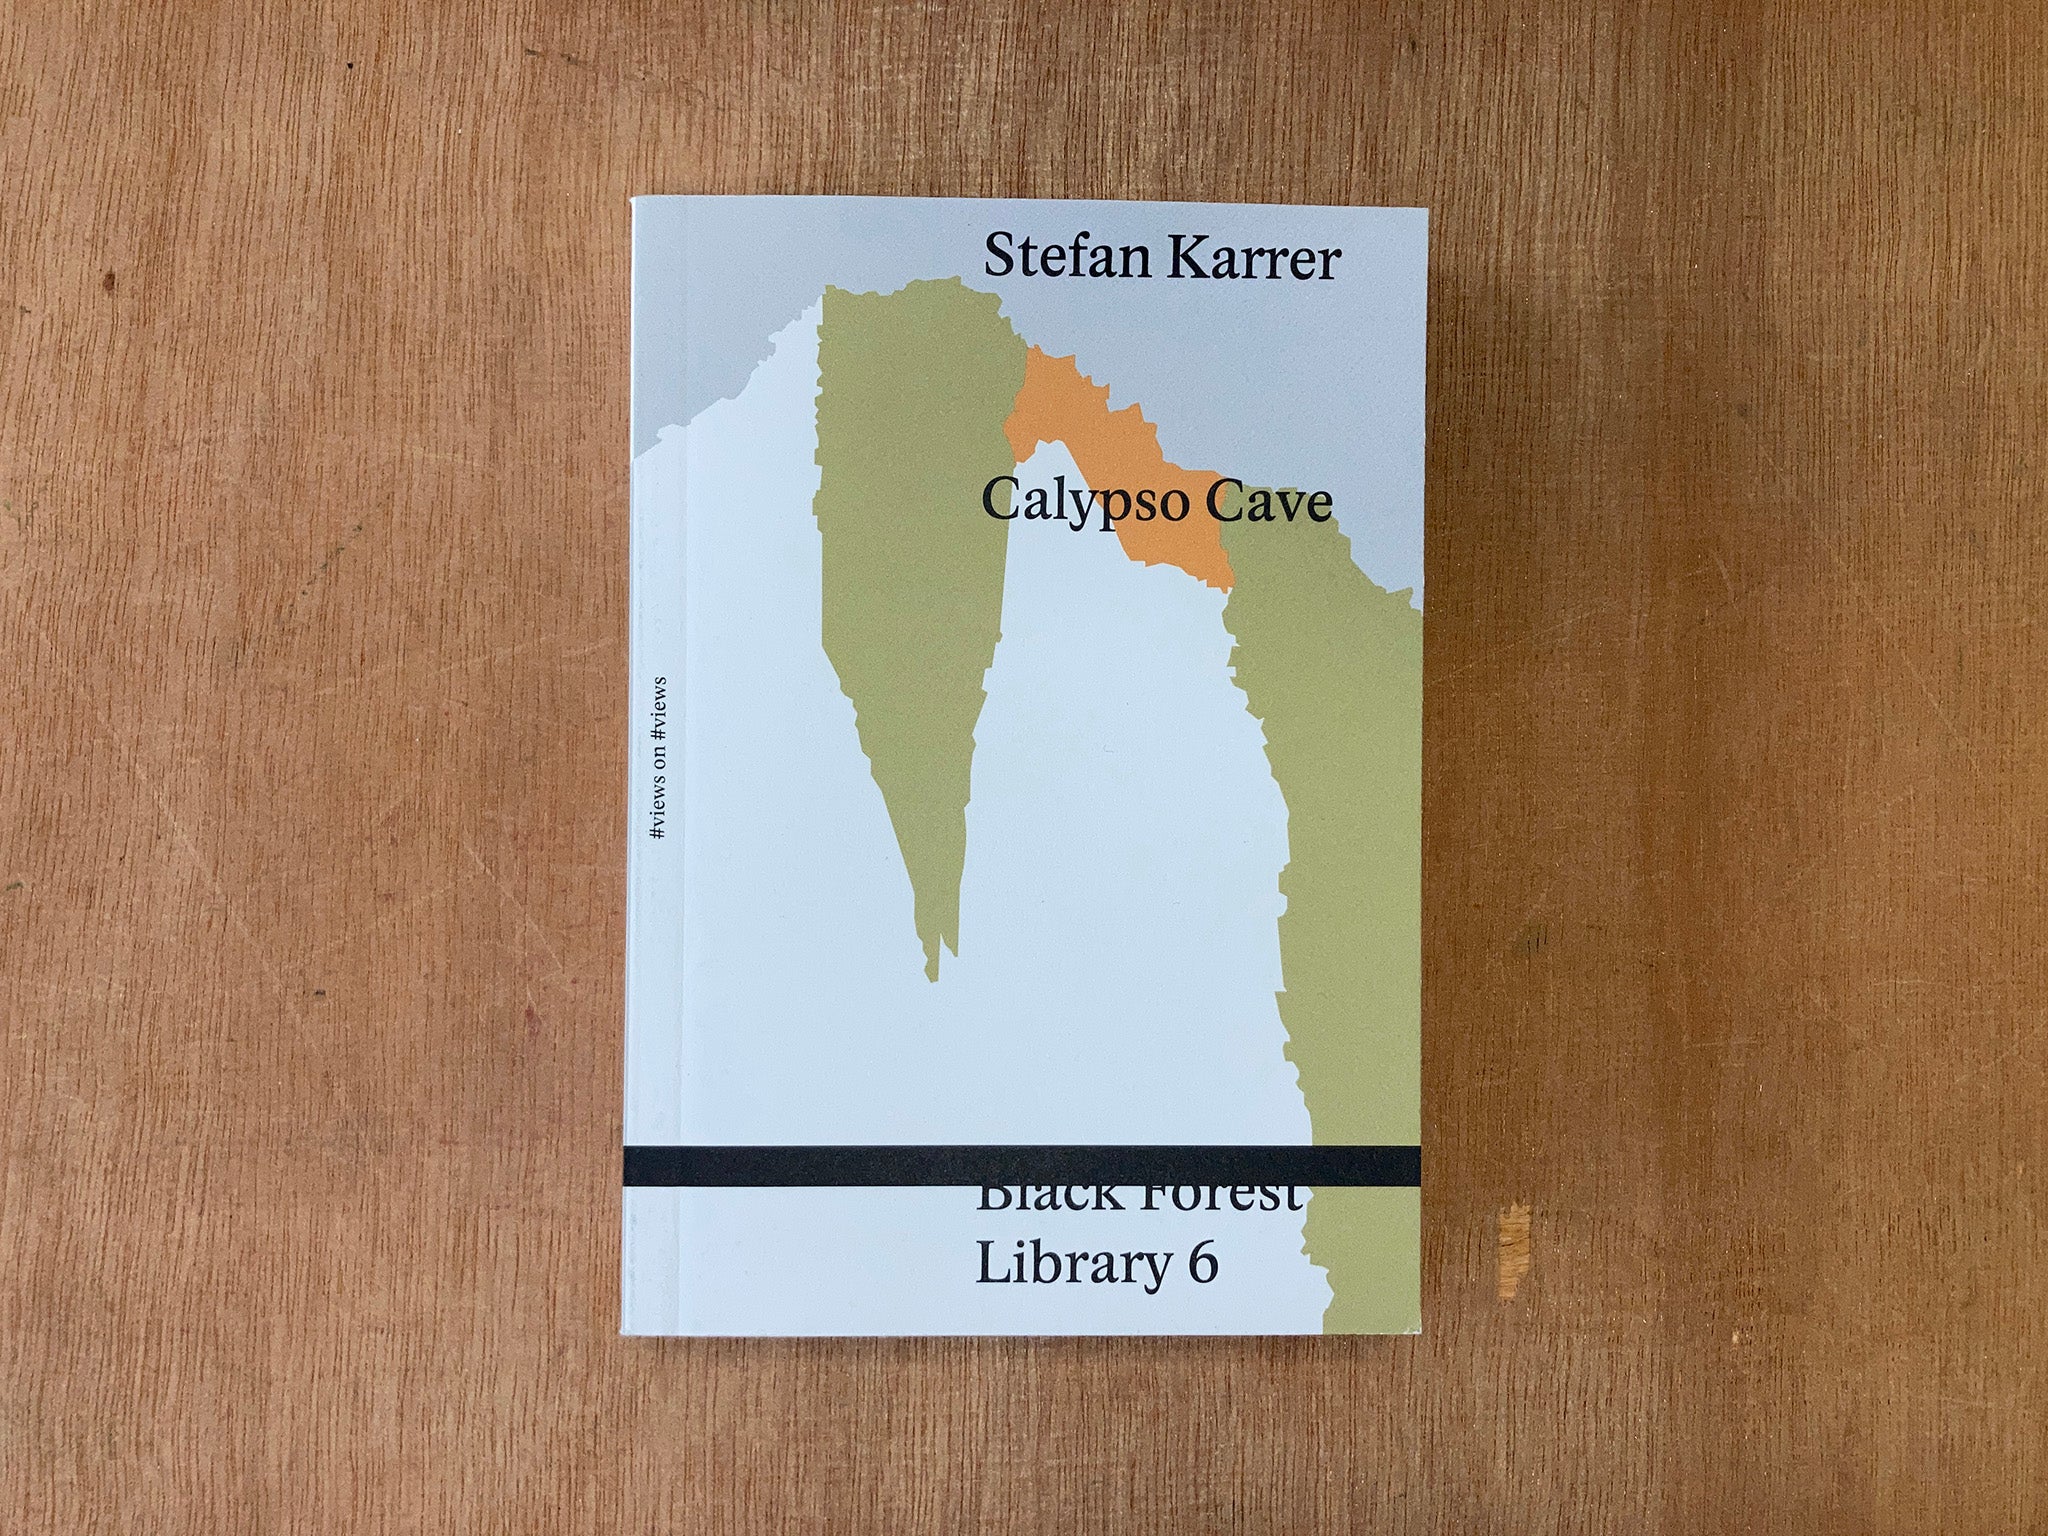 CALYPSO CAVE by Stefan Karrer